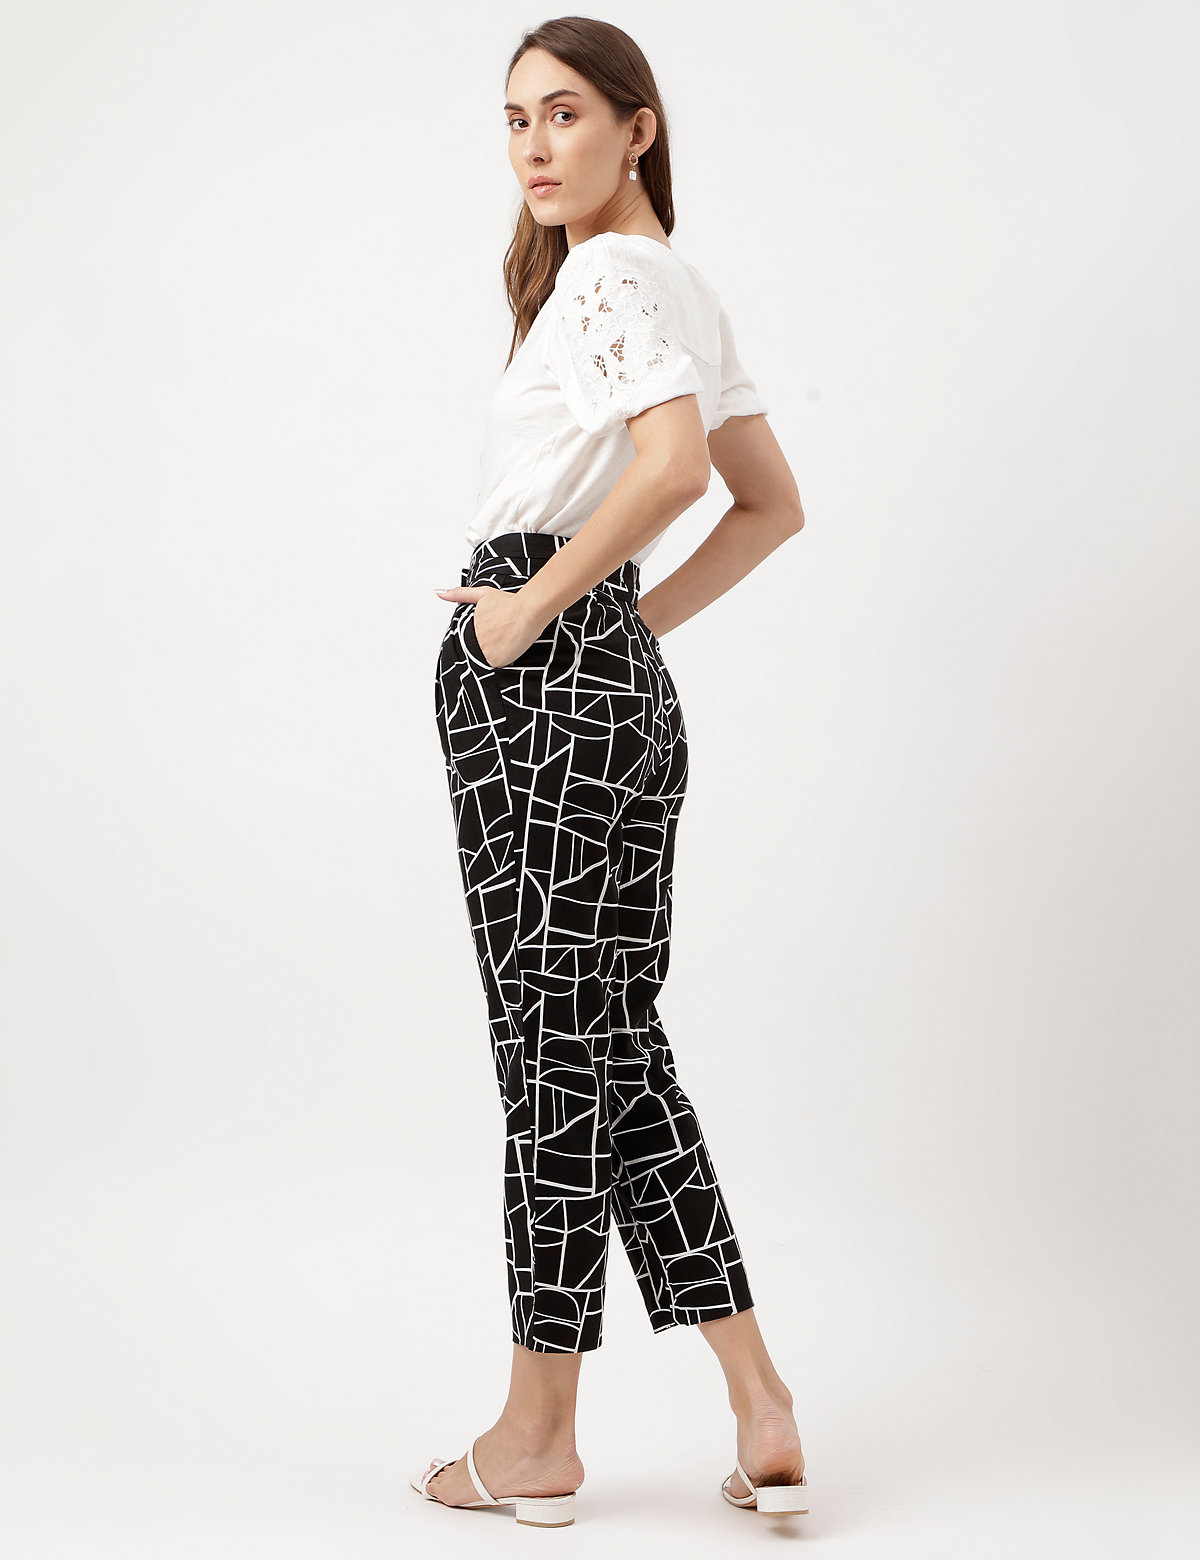 Linen Rich Geometric Print Ankle Length Trousers